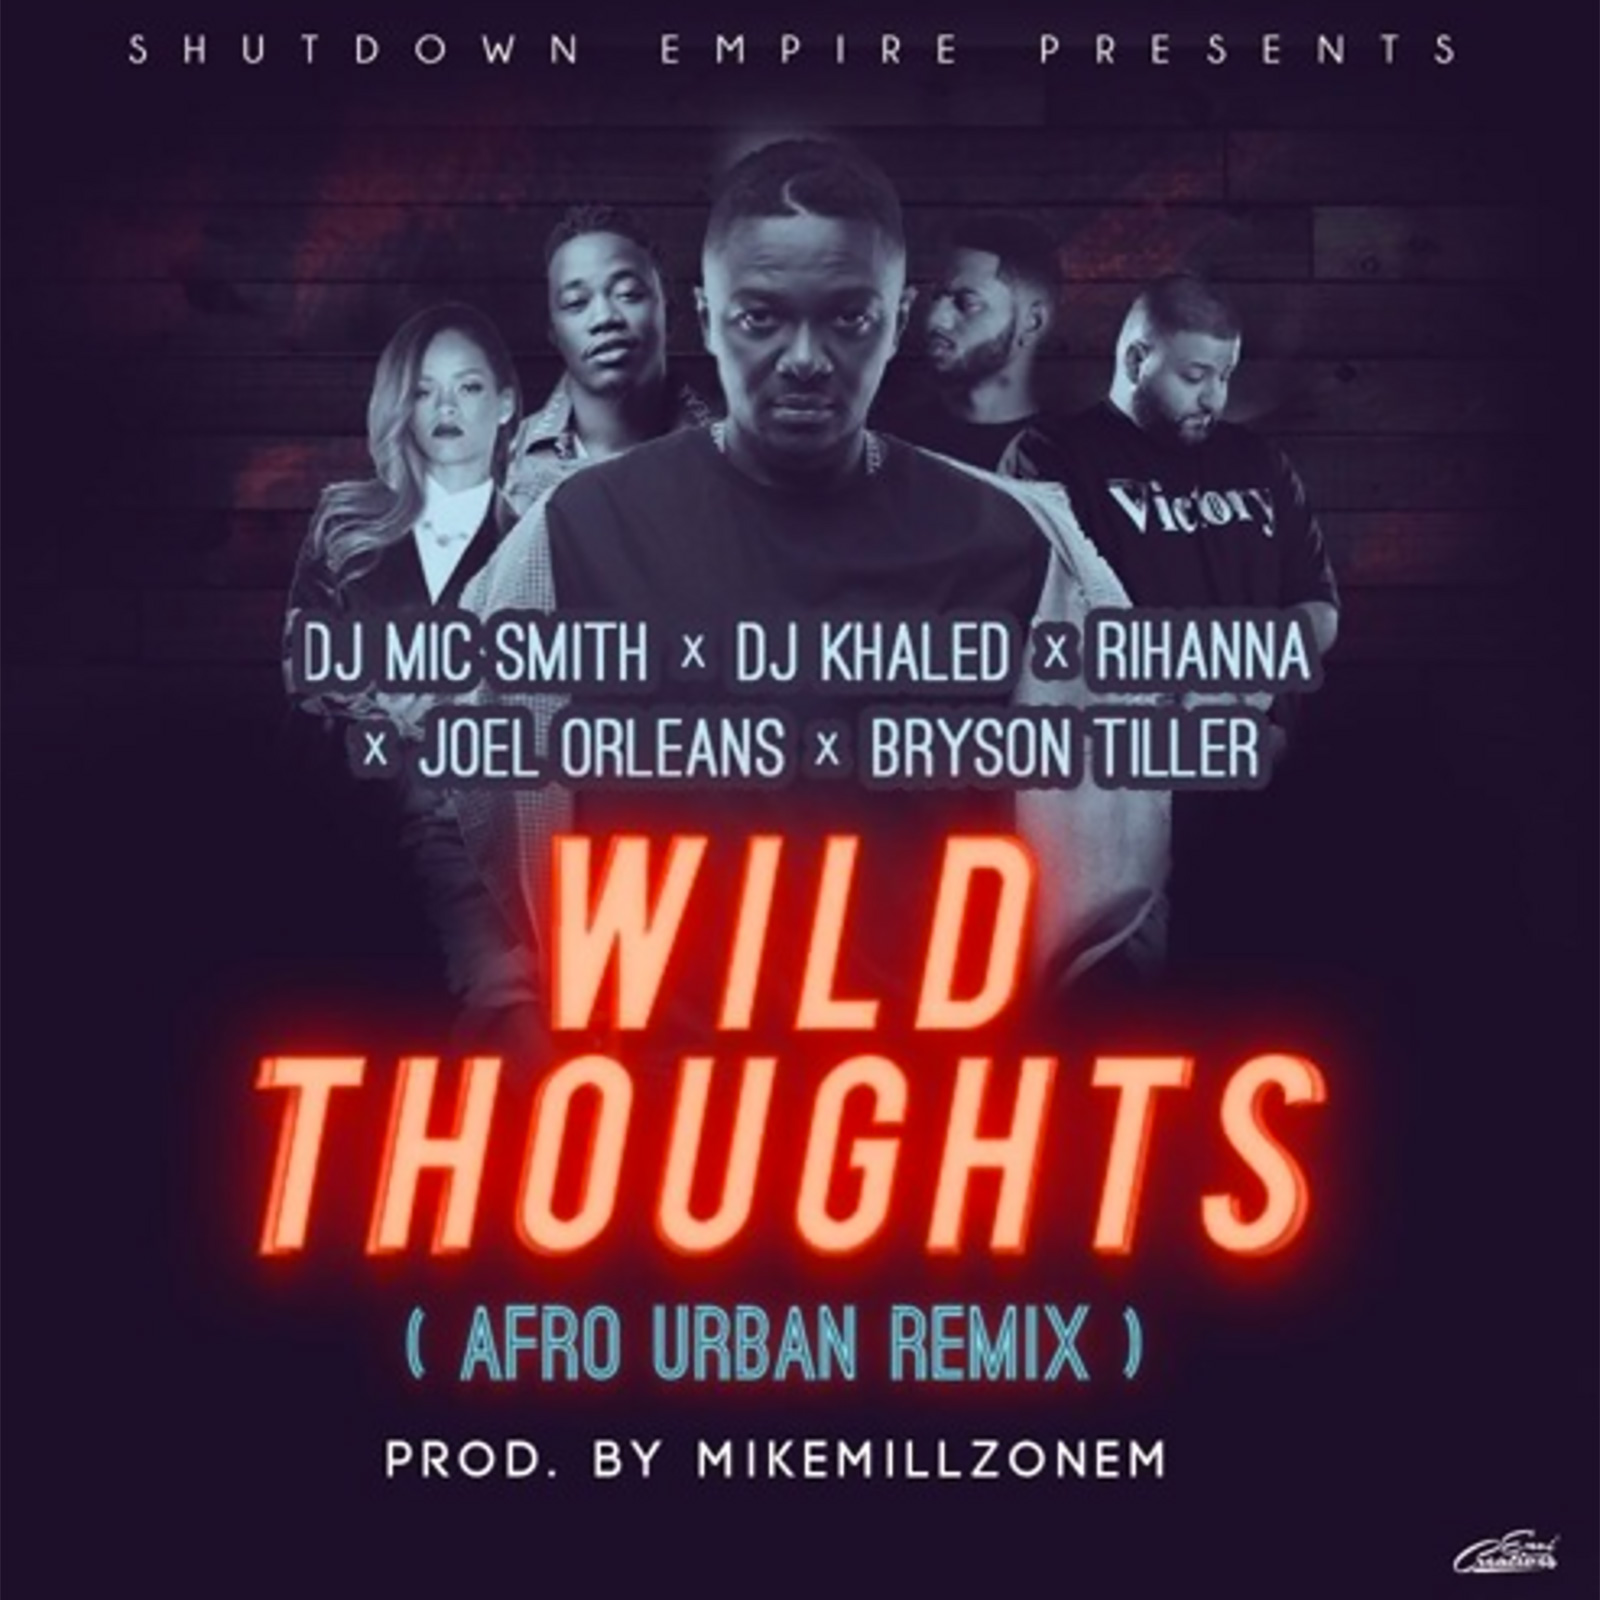 Wild Thoughts (Afro Urban Remix) by DJ Mic Smith feat. DJ Khaled, Rihanna, J.O.E.L & Bryson Tiller